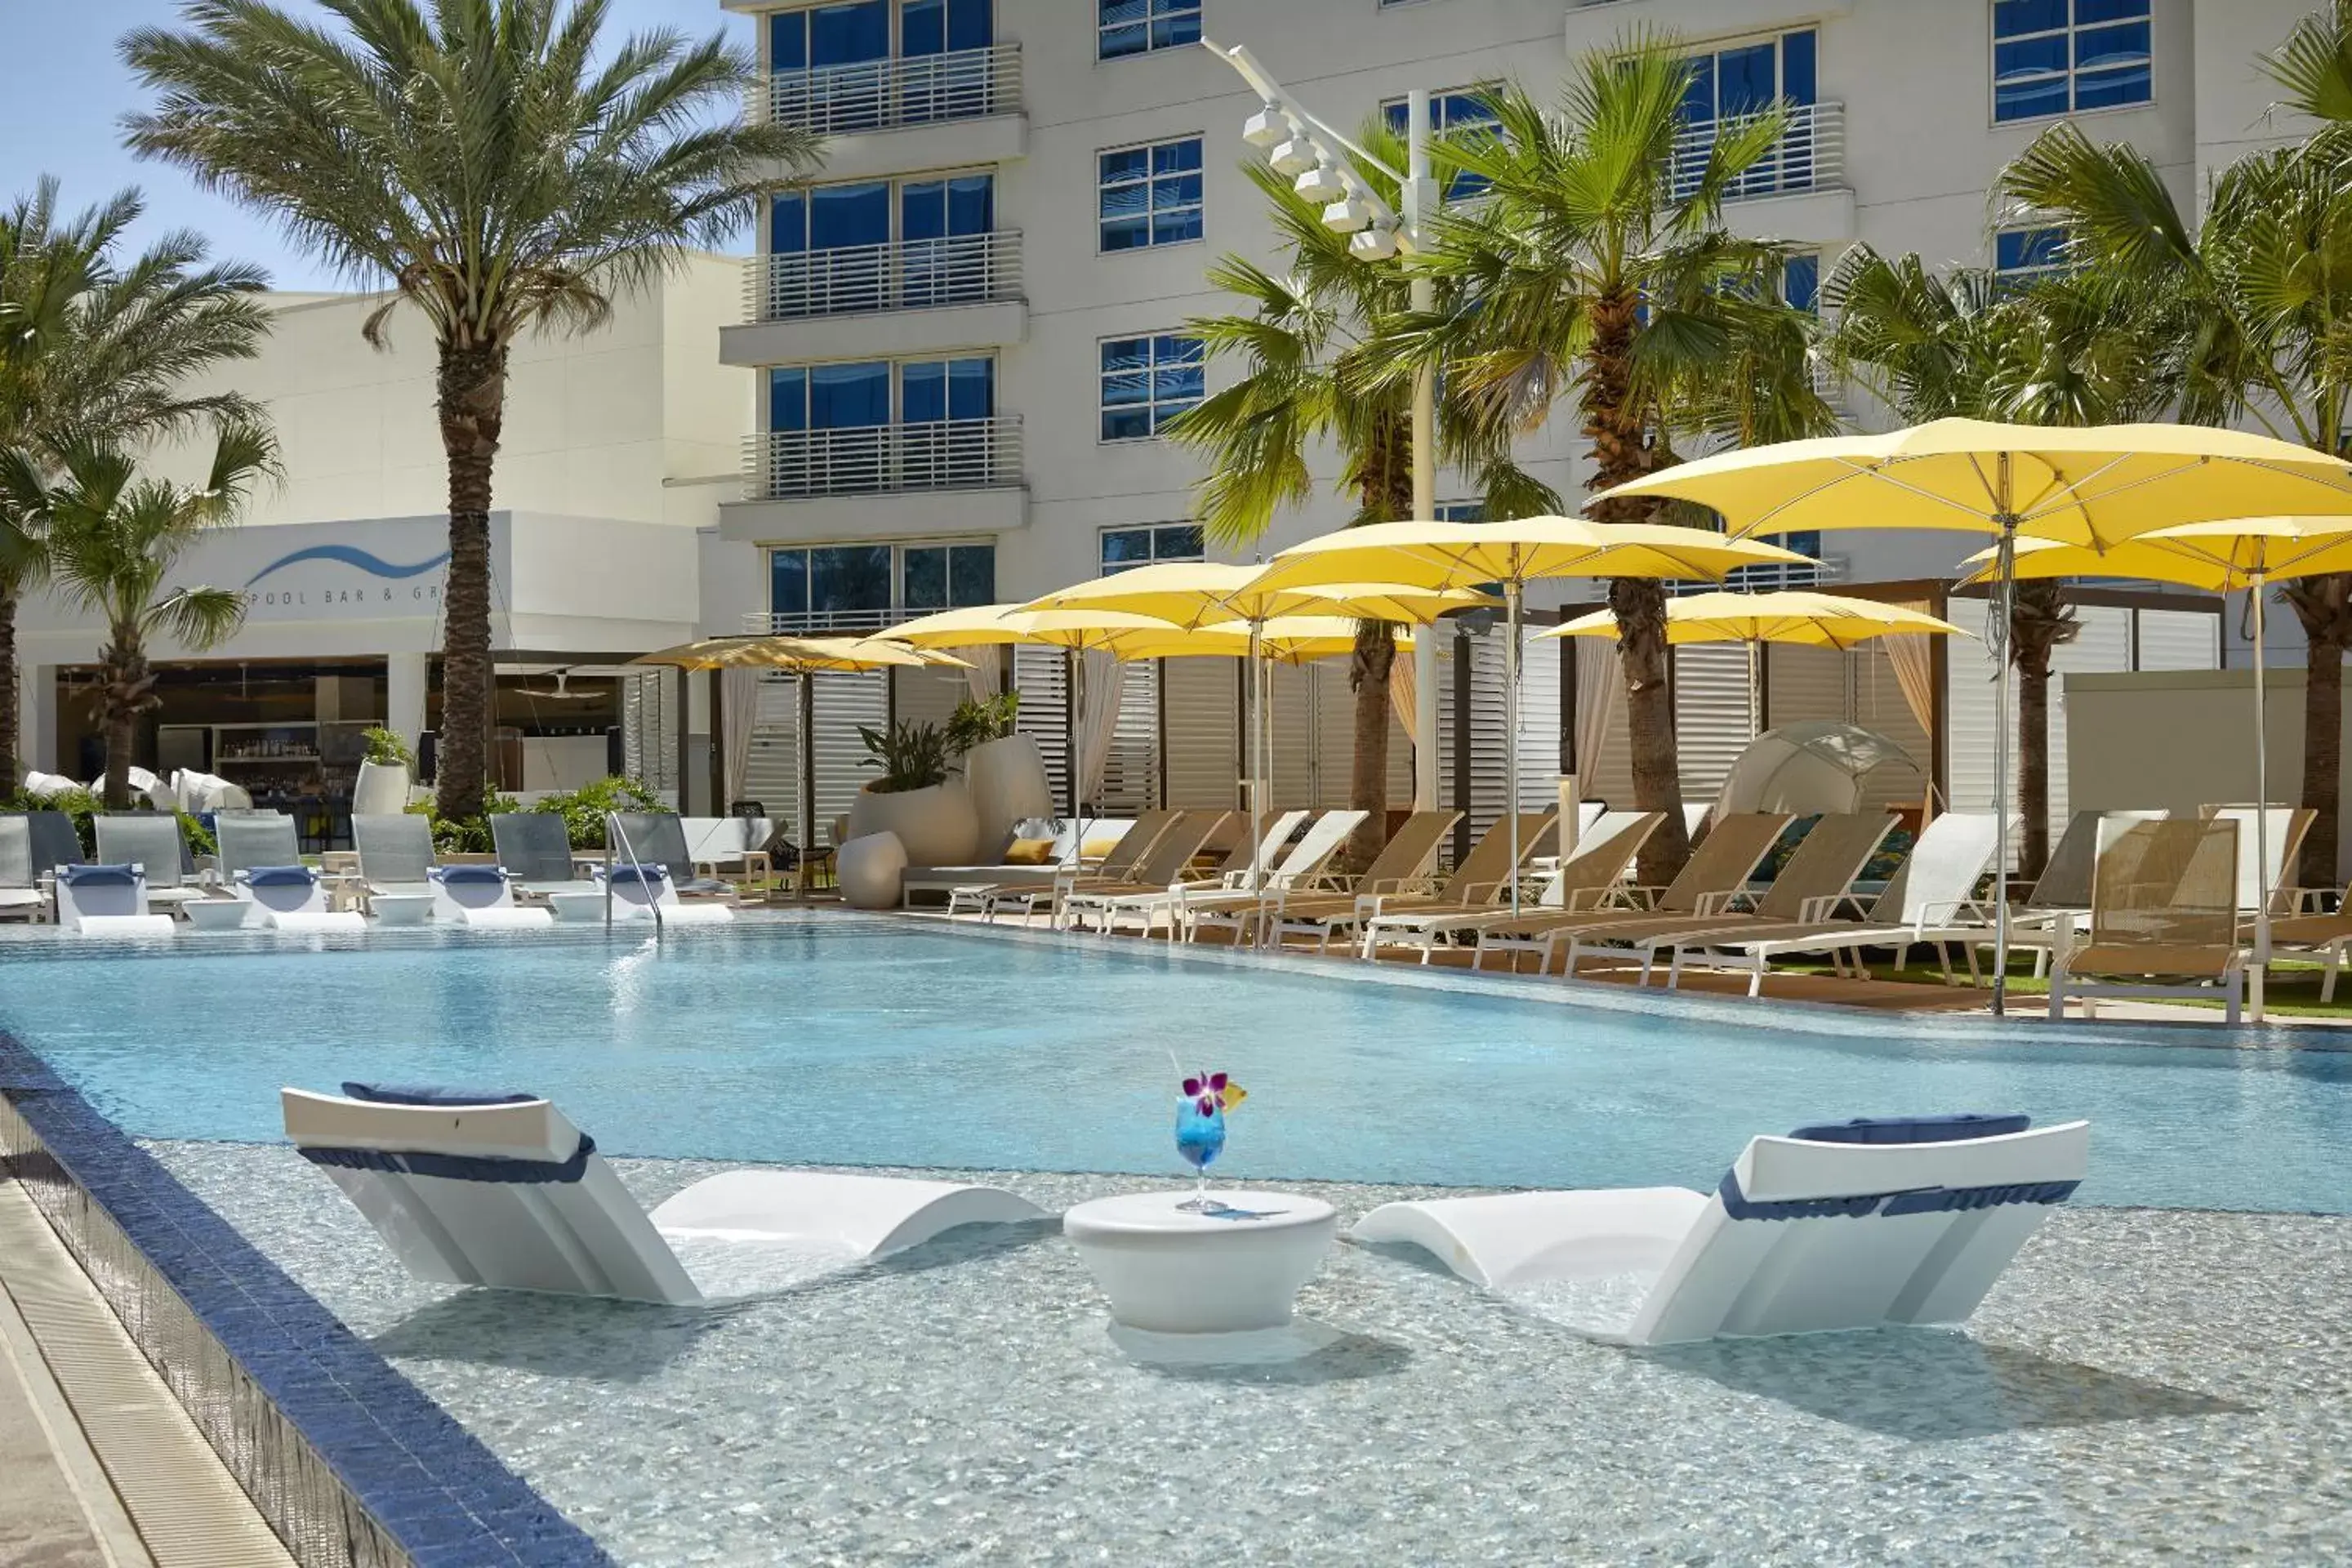 Swimming Pool in Seminole Hard Rock Hotel and Casino Tampa